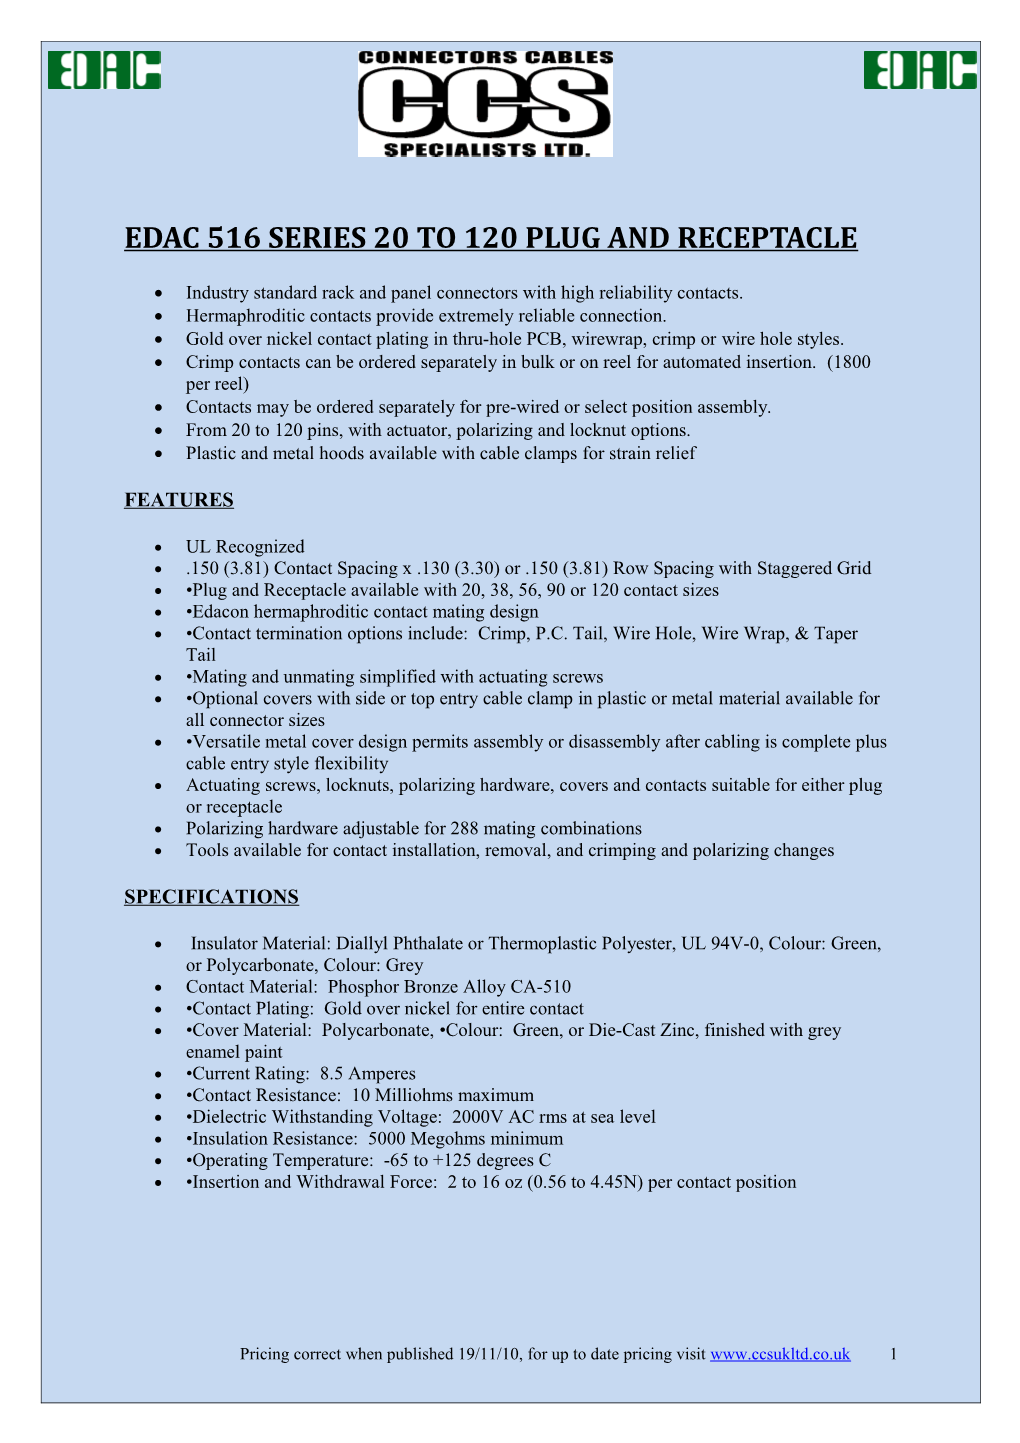 Edac 516 Series 20 to 120 Plug and Receptacle